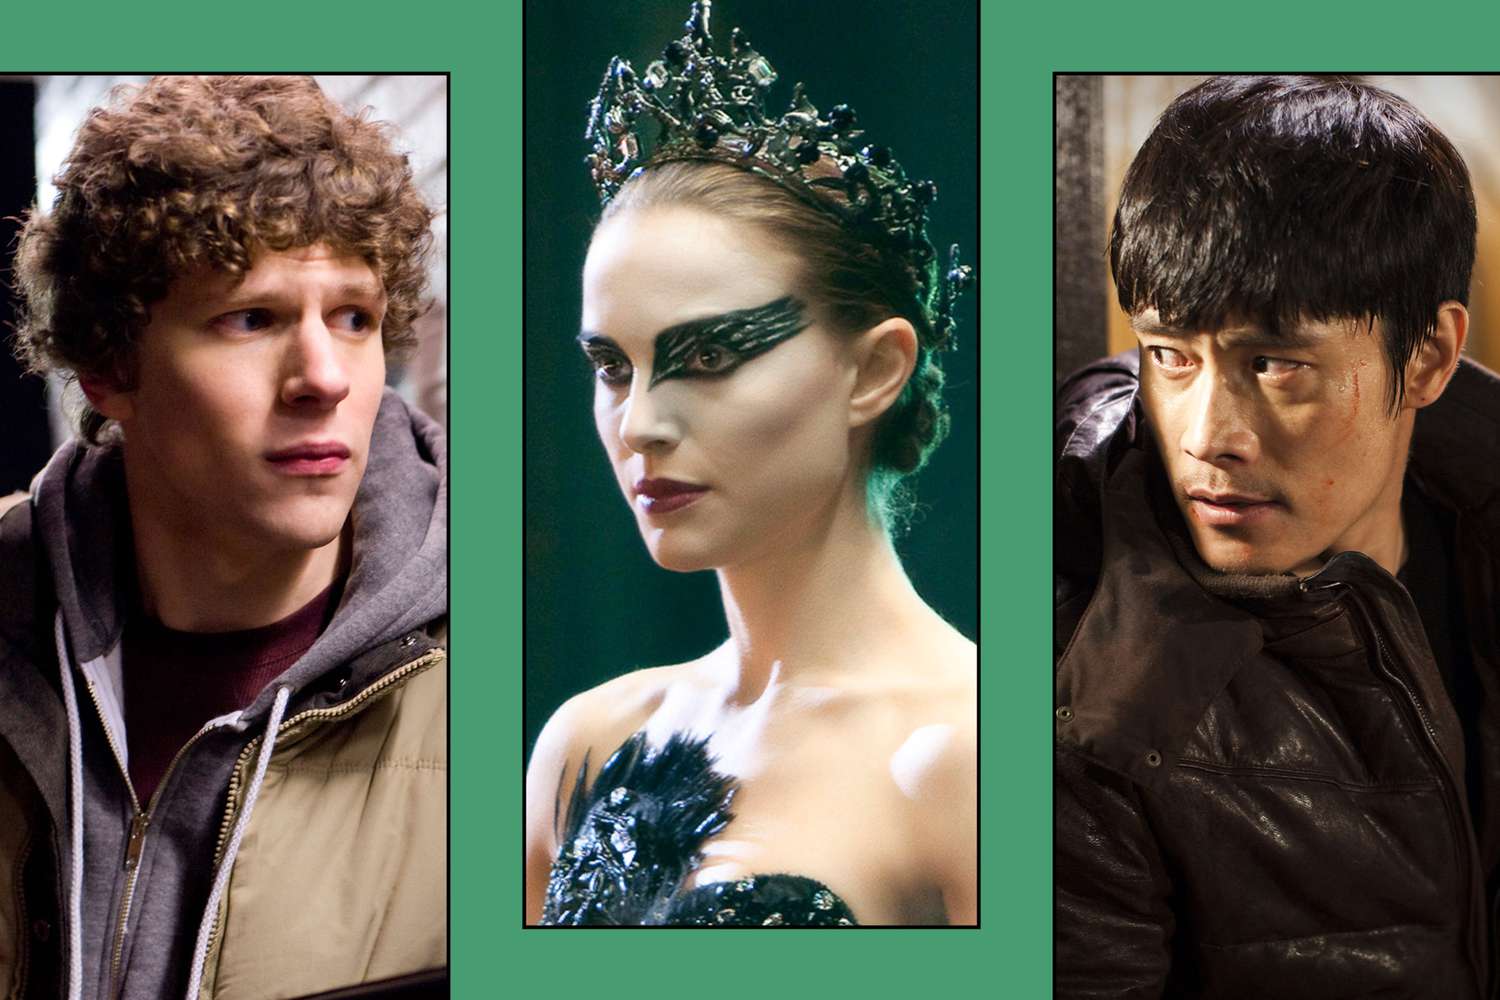 Jesse Eisenberg in 'Zombieland' (2009); Natalie Portman in 'Black Swan' (2010); Lee Byung-hun in 'I Saw the Devil' (2010)